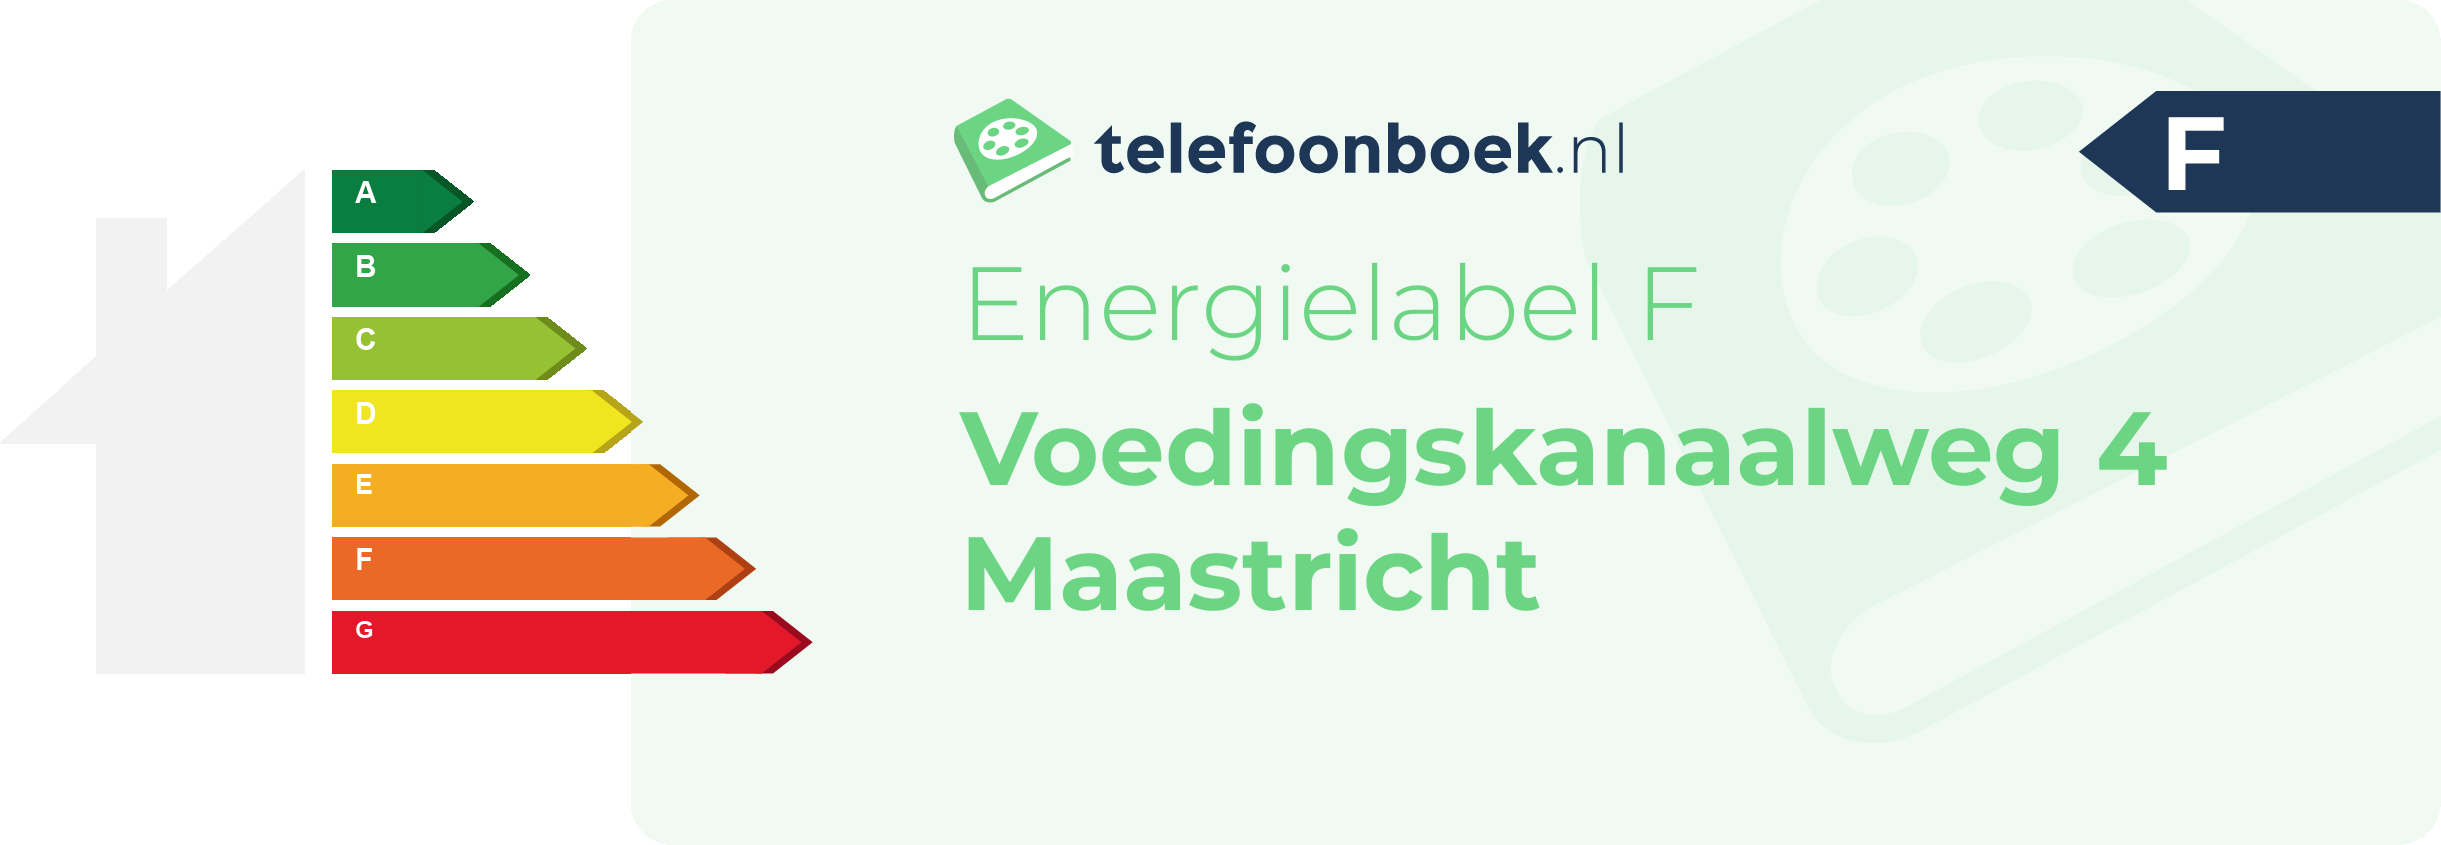 Energielabel Voedingskanaalweg 4 Maastricht